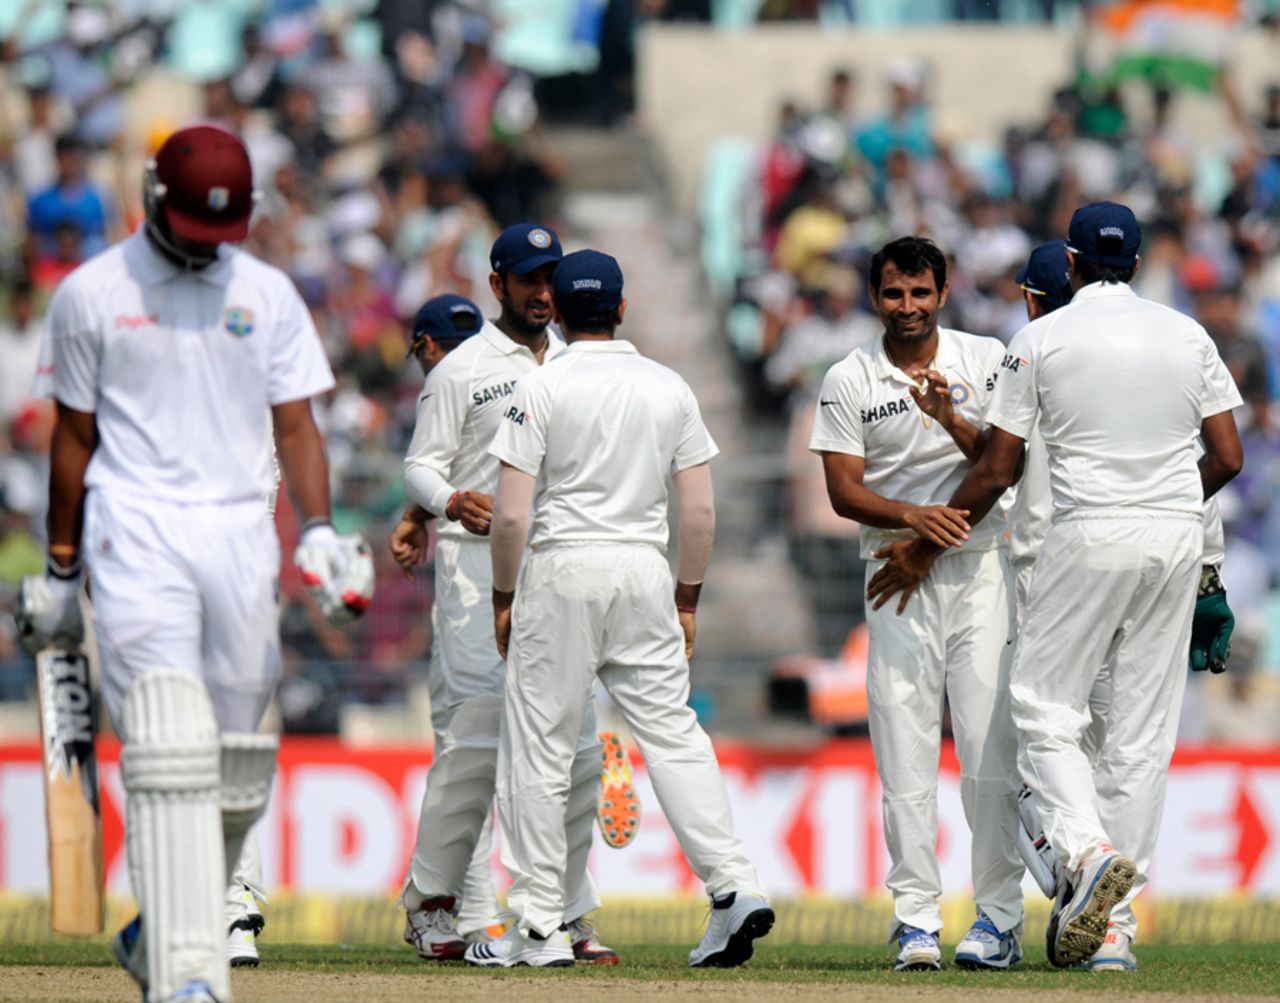 Mohammed Shami dismissed Kieran Powell for his maiden Test wicket, India v West Indies, 1st Test, Kolkata, 1st day, November 6, 2013